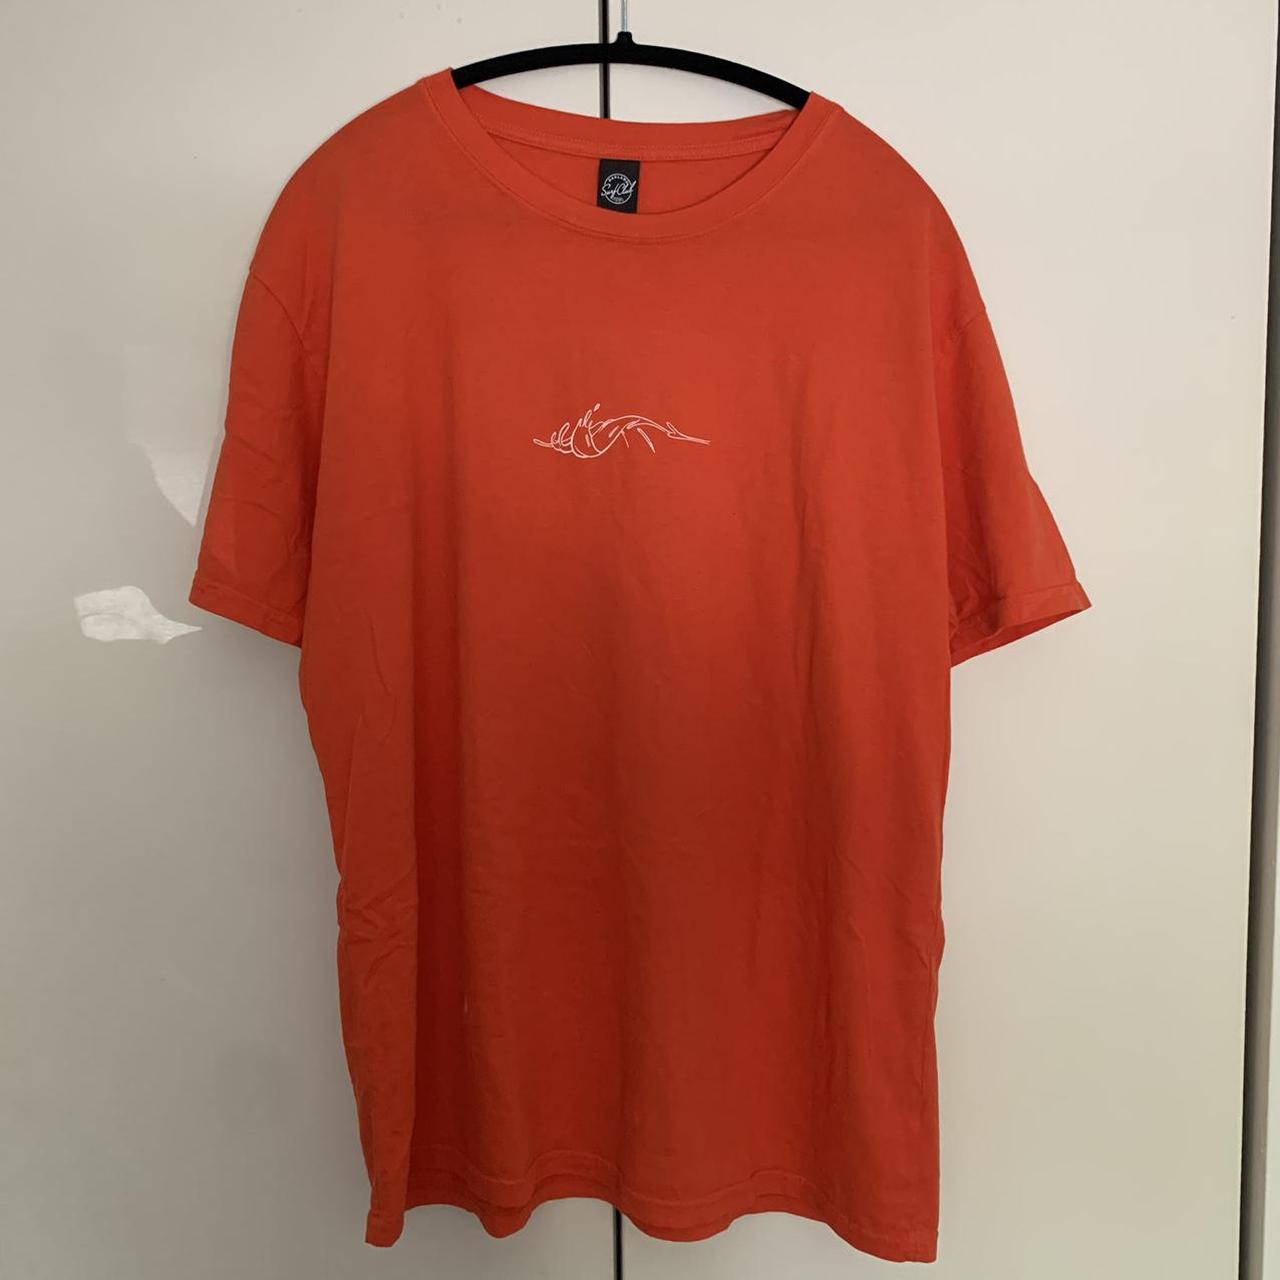 PacSun Women's Orange and Red T-shirt | Depop